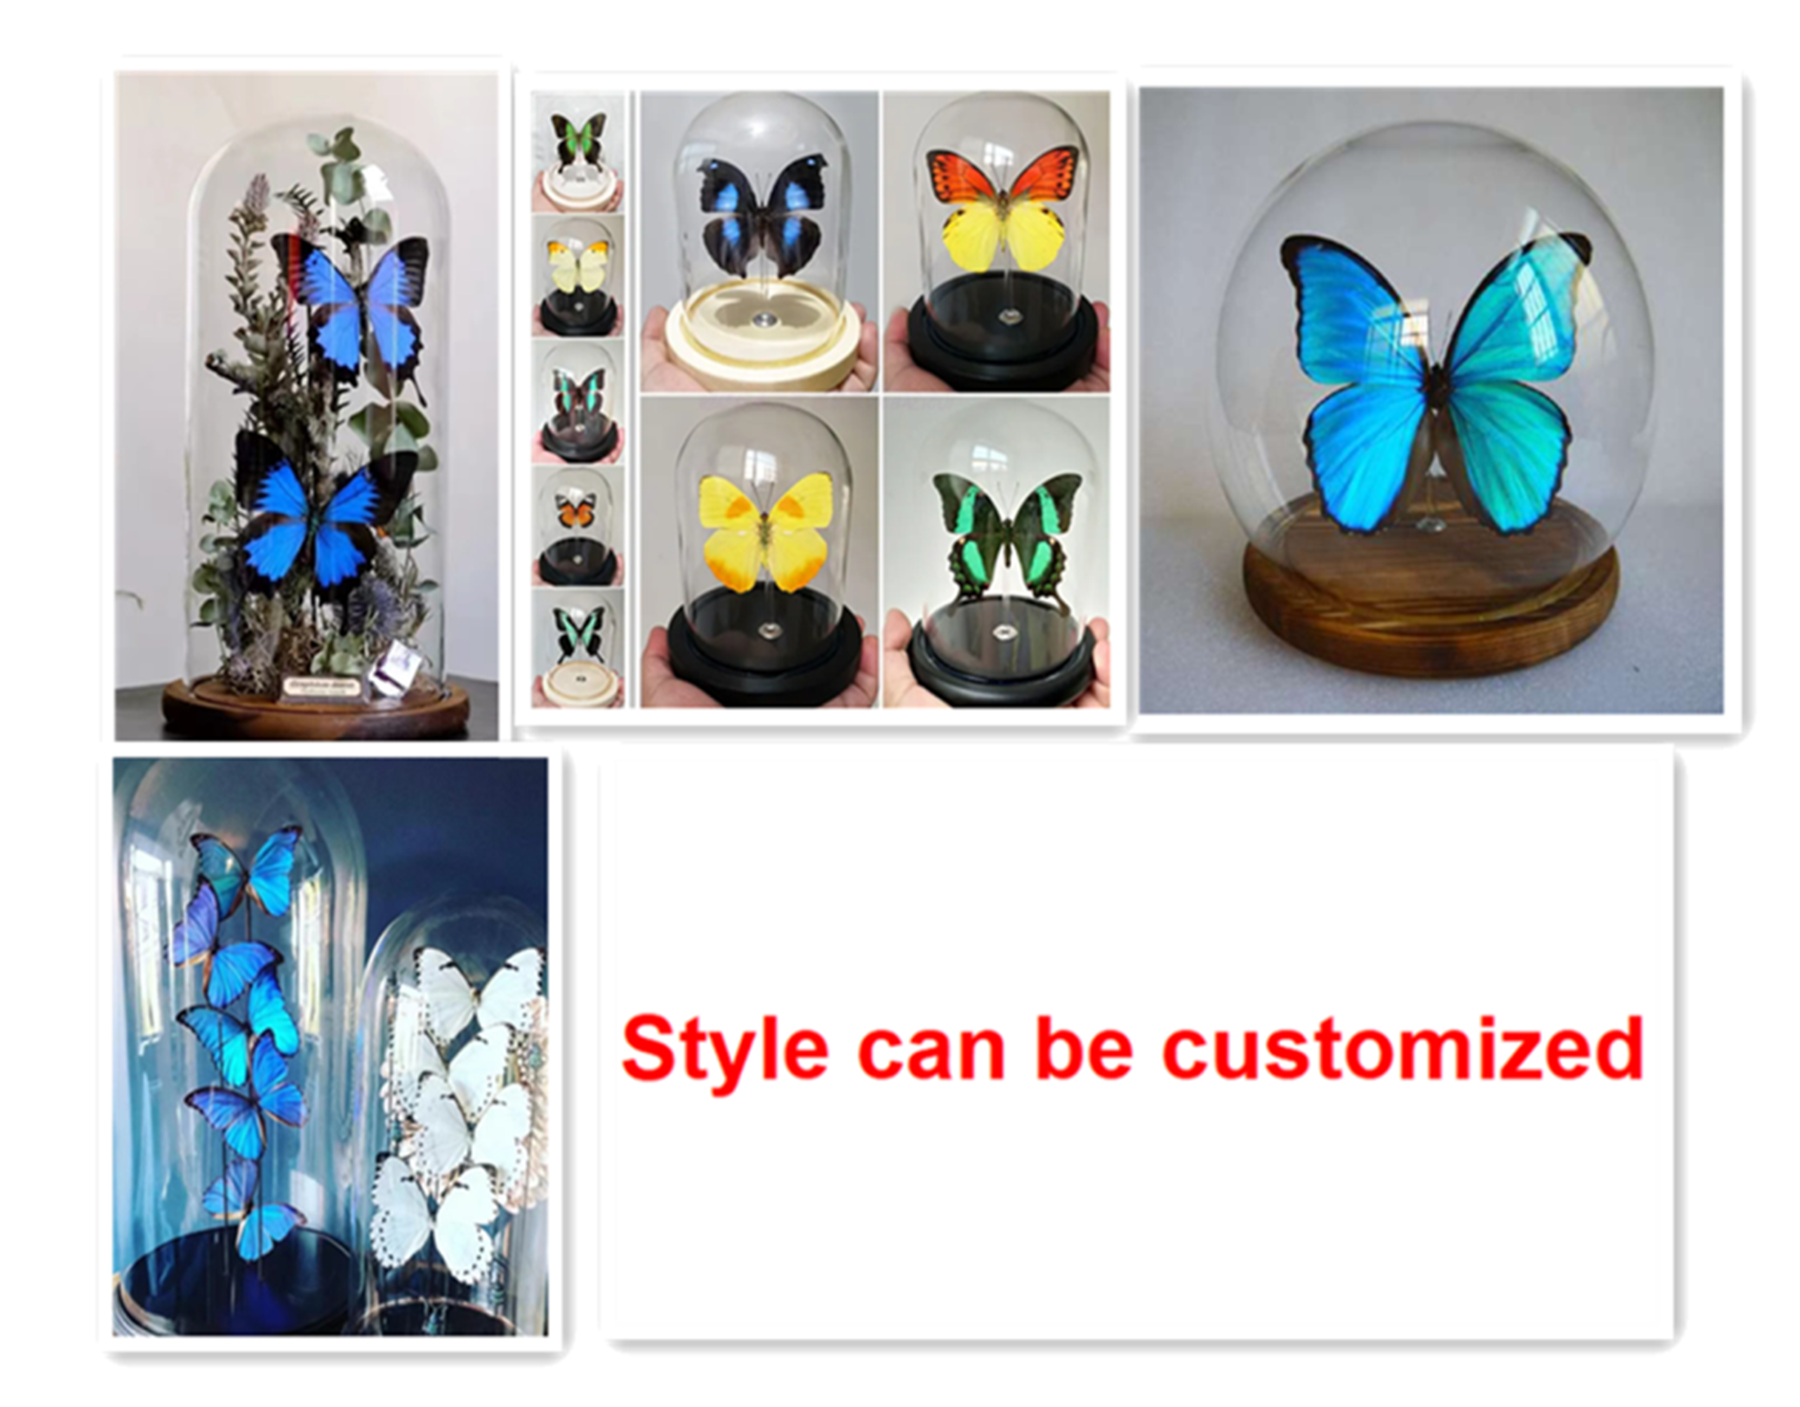 Polyura Schreiber Butterfly Suppliers & Wholesalers - CF Butterfly